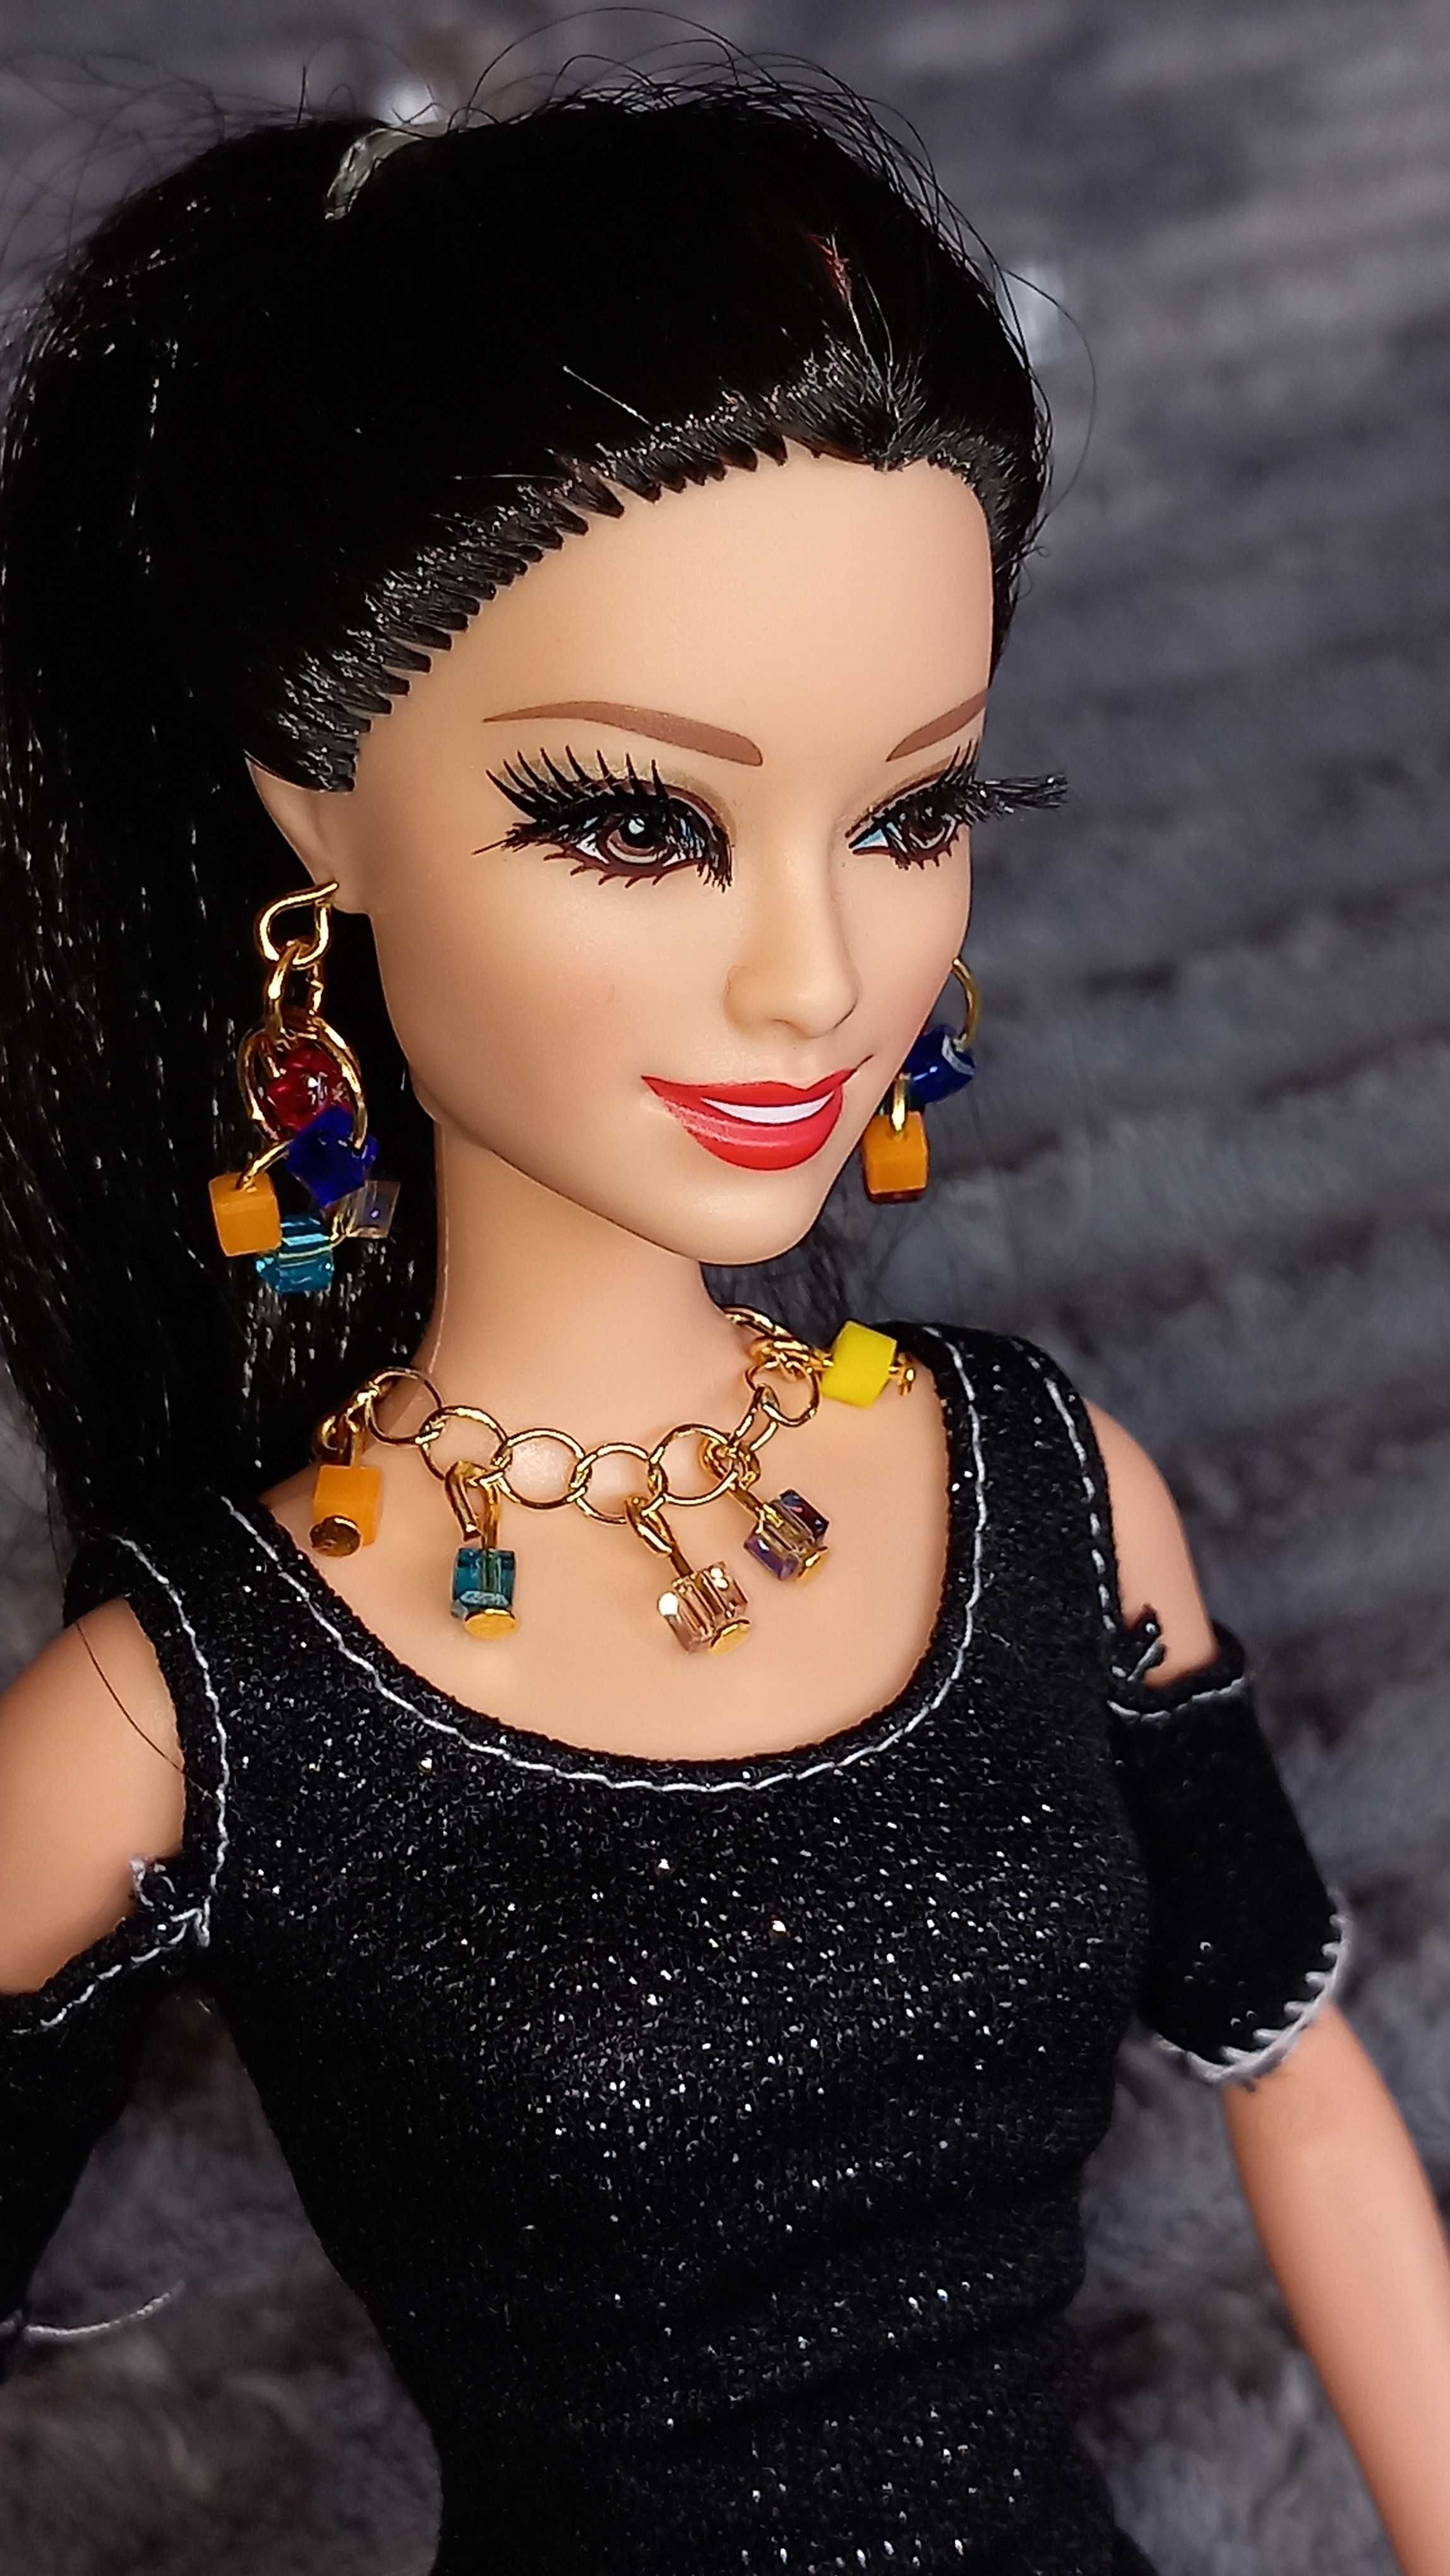 Komplet biżuterii dla lalek Barbie, Integrity Toys.